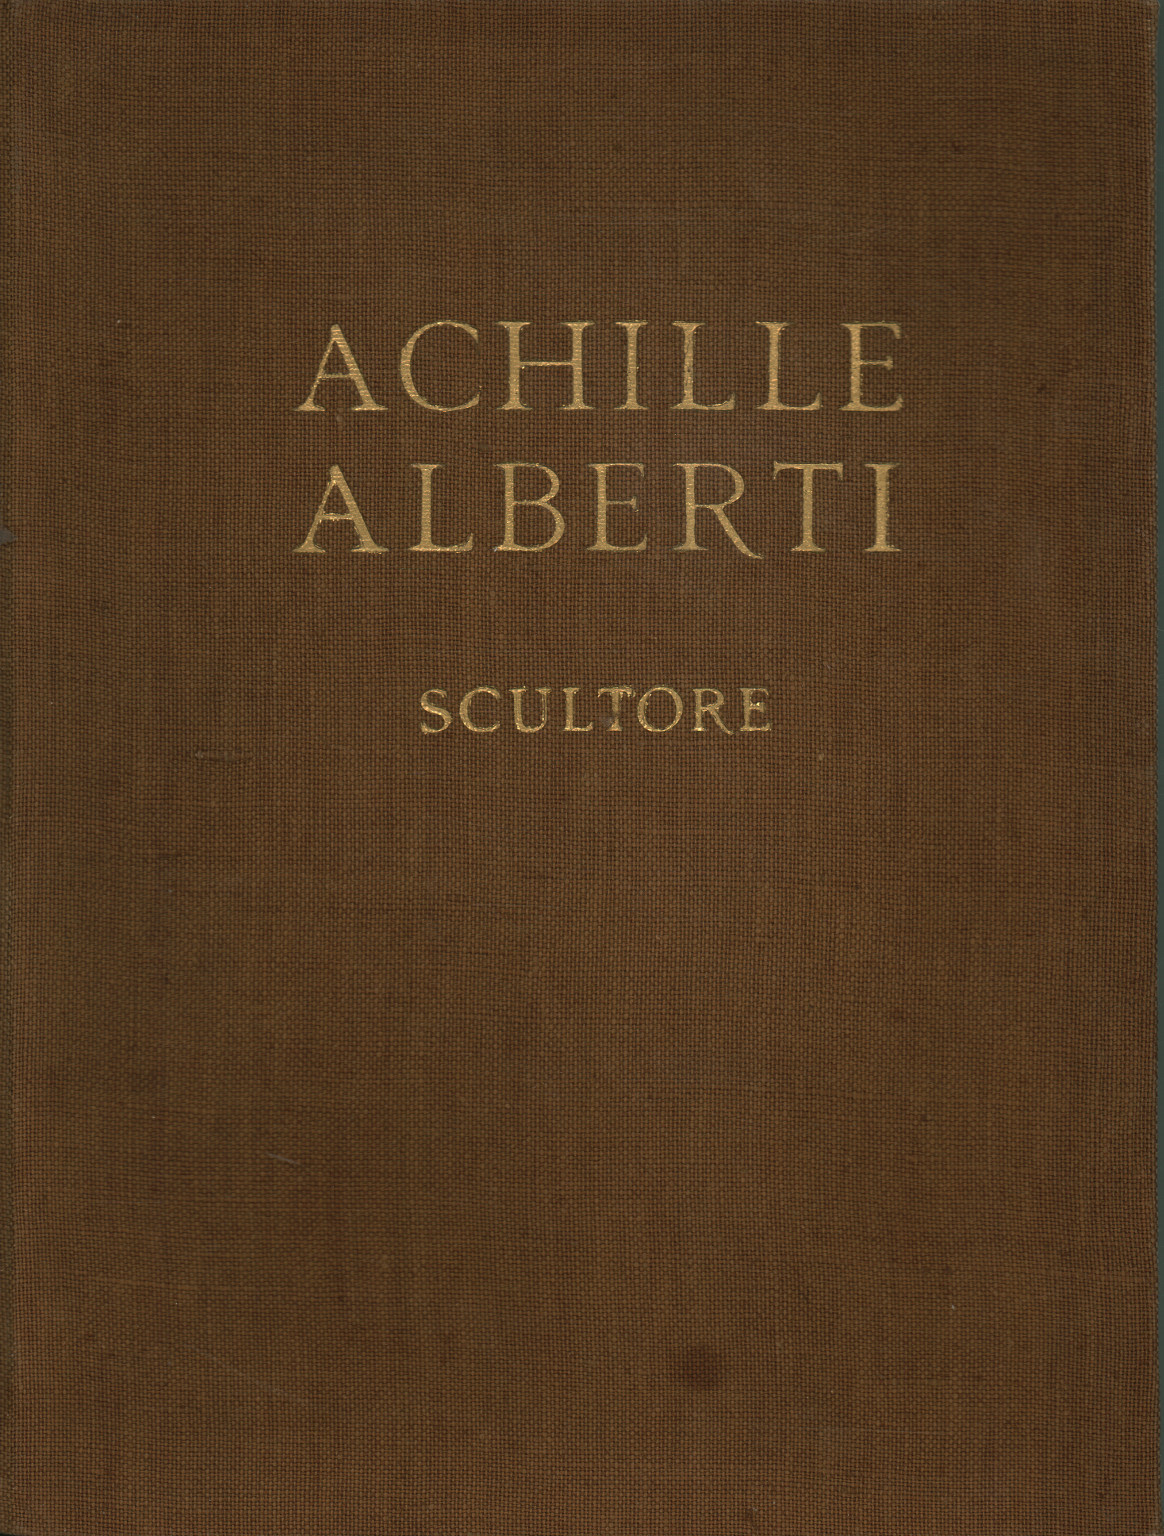 Achille Alberti sculptor, s.a.